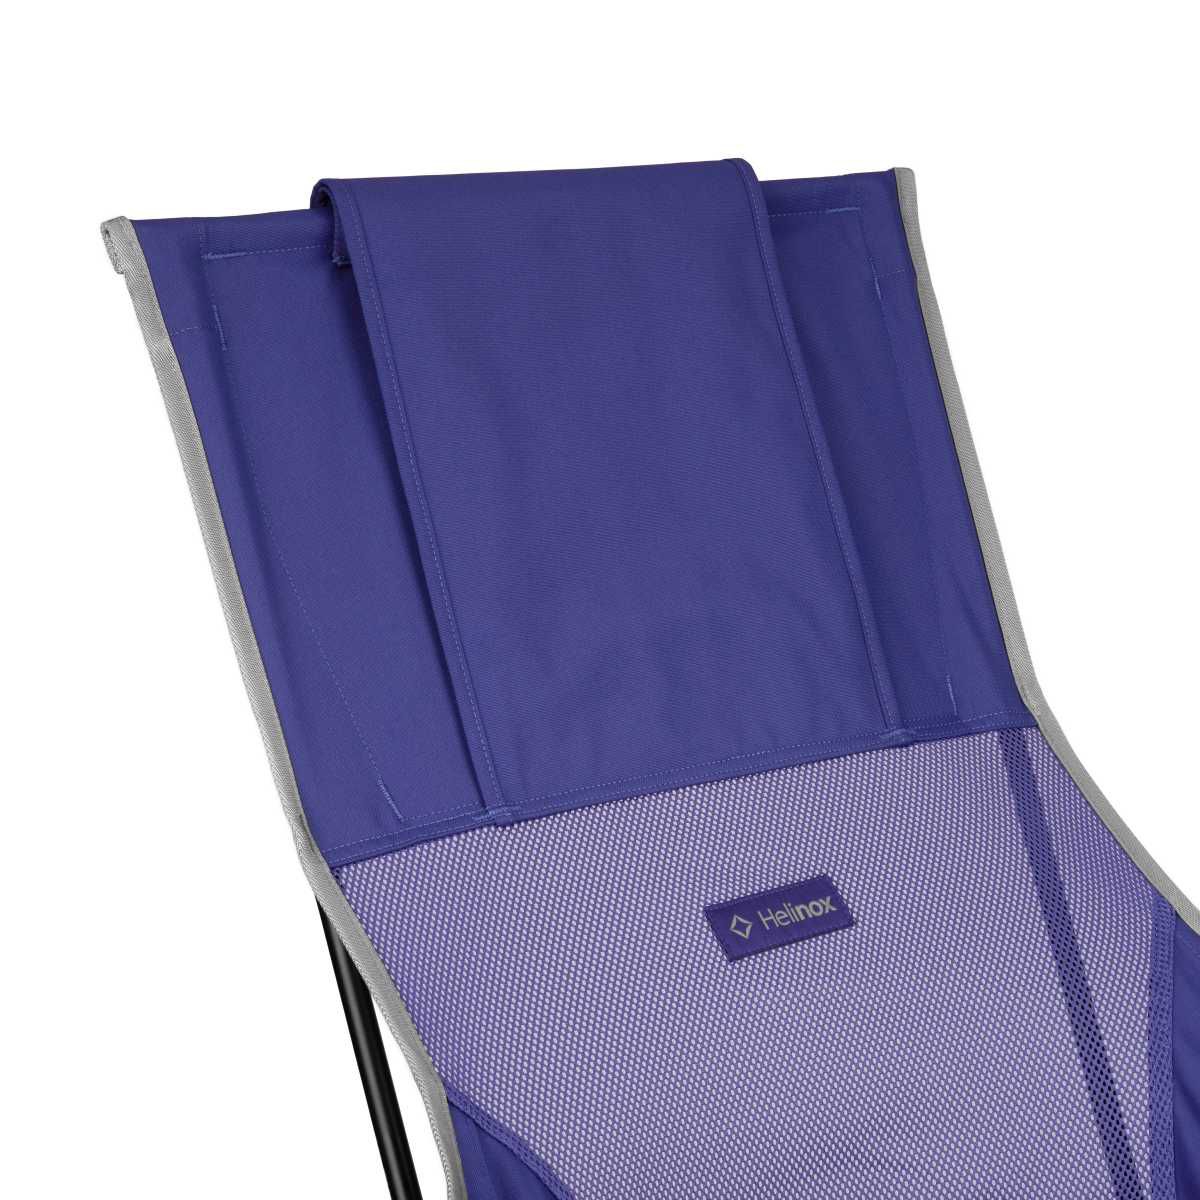 HELINOX Savanna Chair Cobalt Campingstuhl 10002806